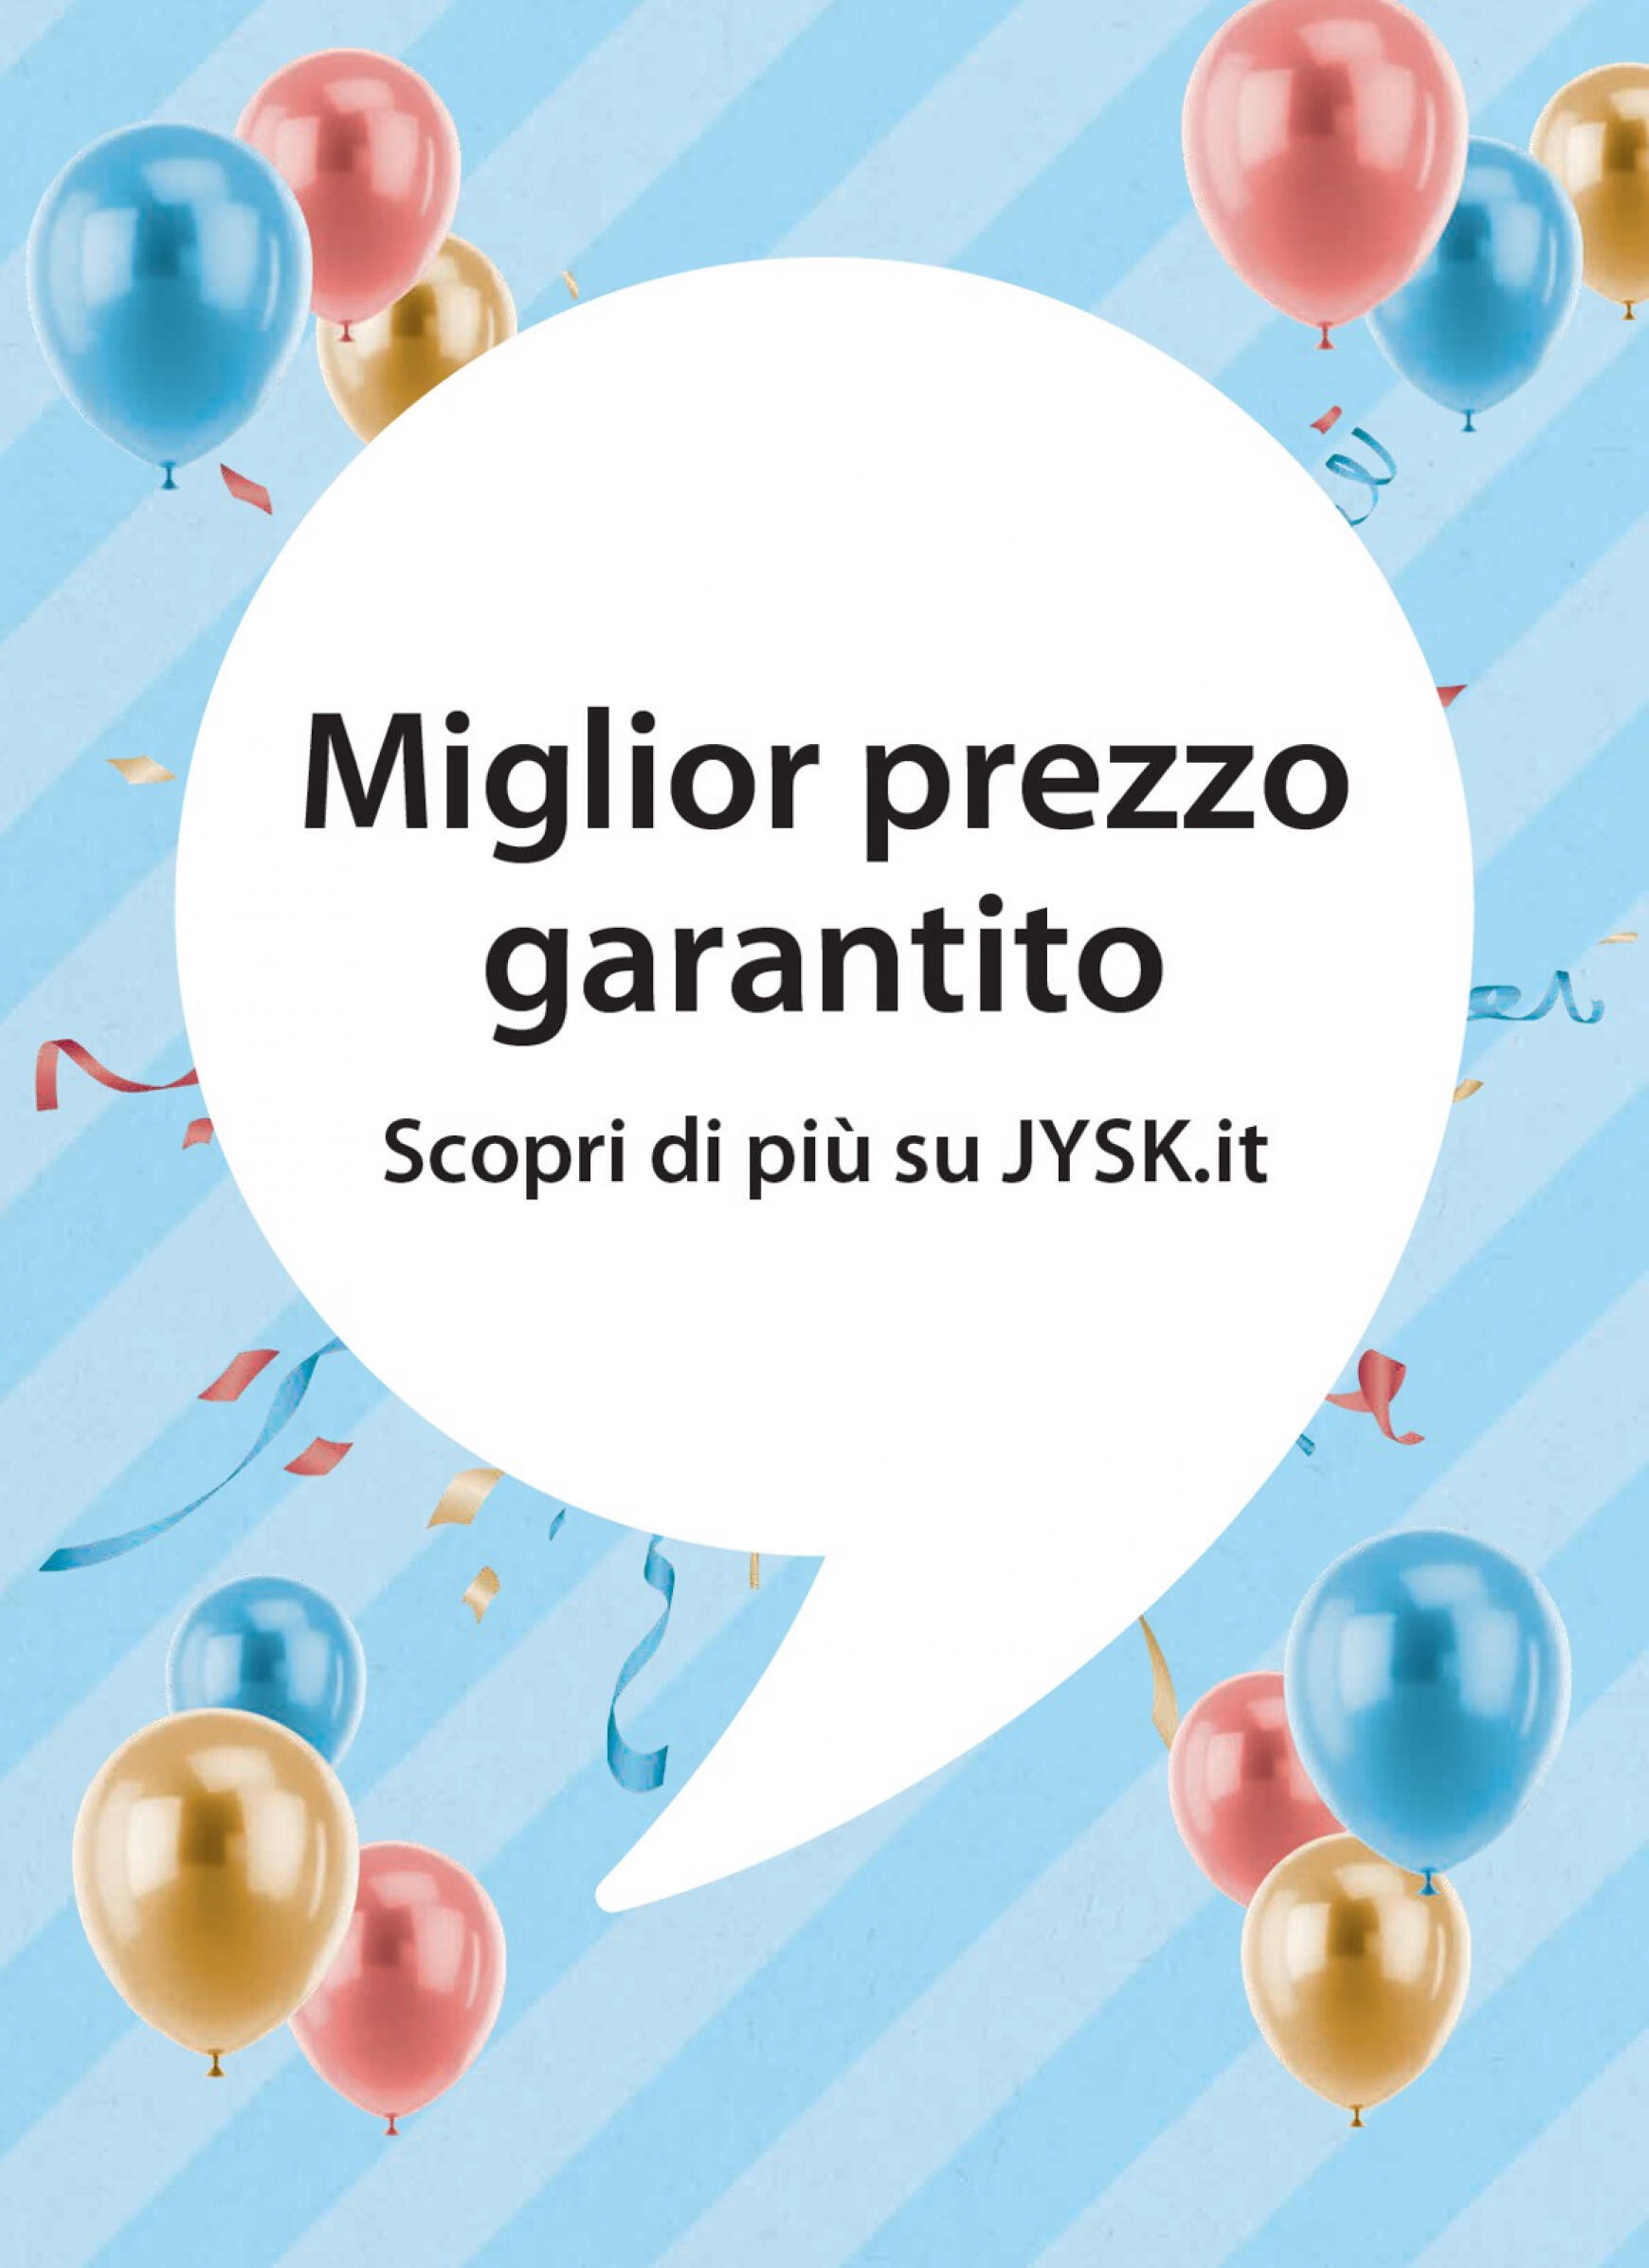 jysk - Nuovo volantino JYSK - Grandi offerte 18.04. - 01.05.